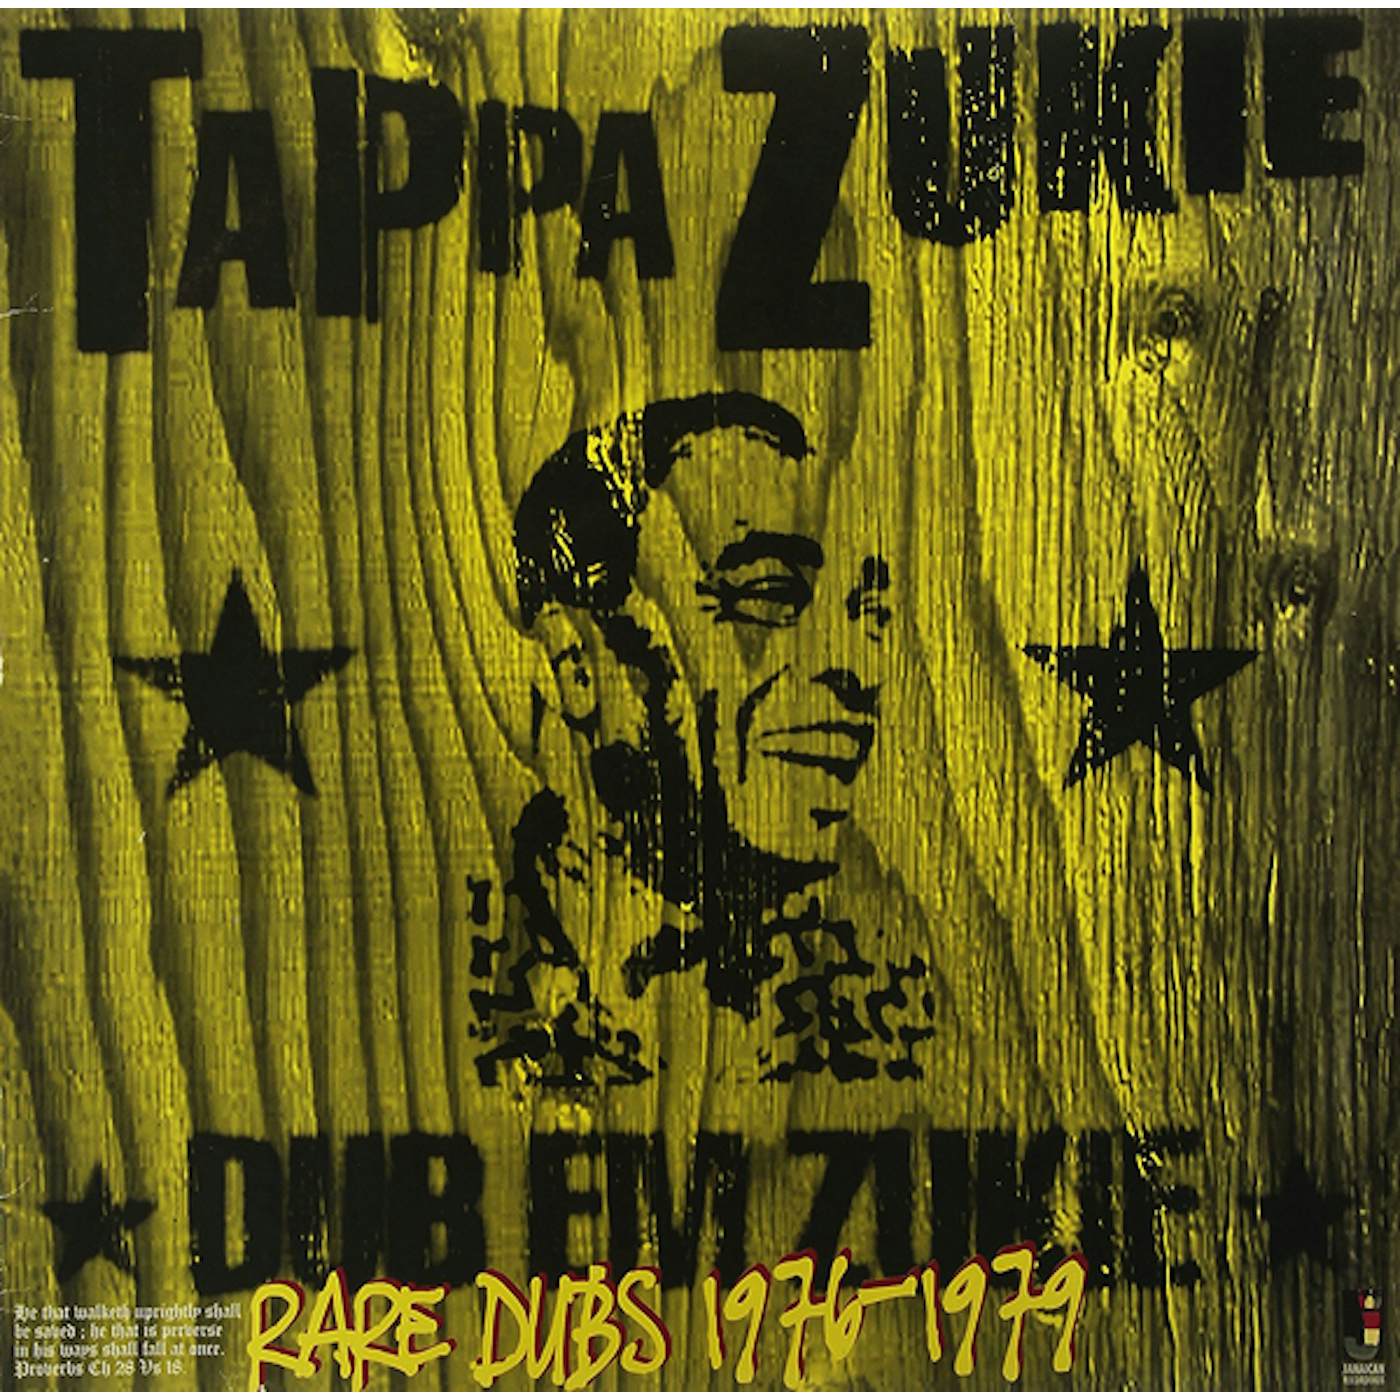 Tappa Zukie DUB EM ZUKIE (RARE DUBS 1976-1979) Vinyl Record